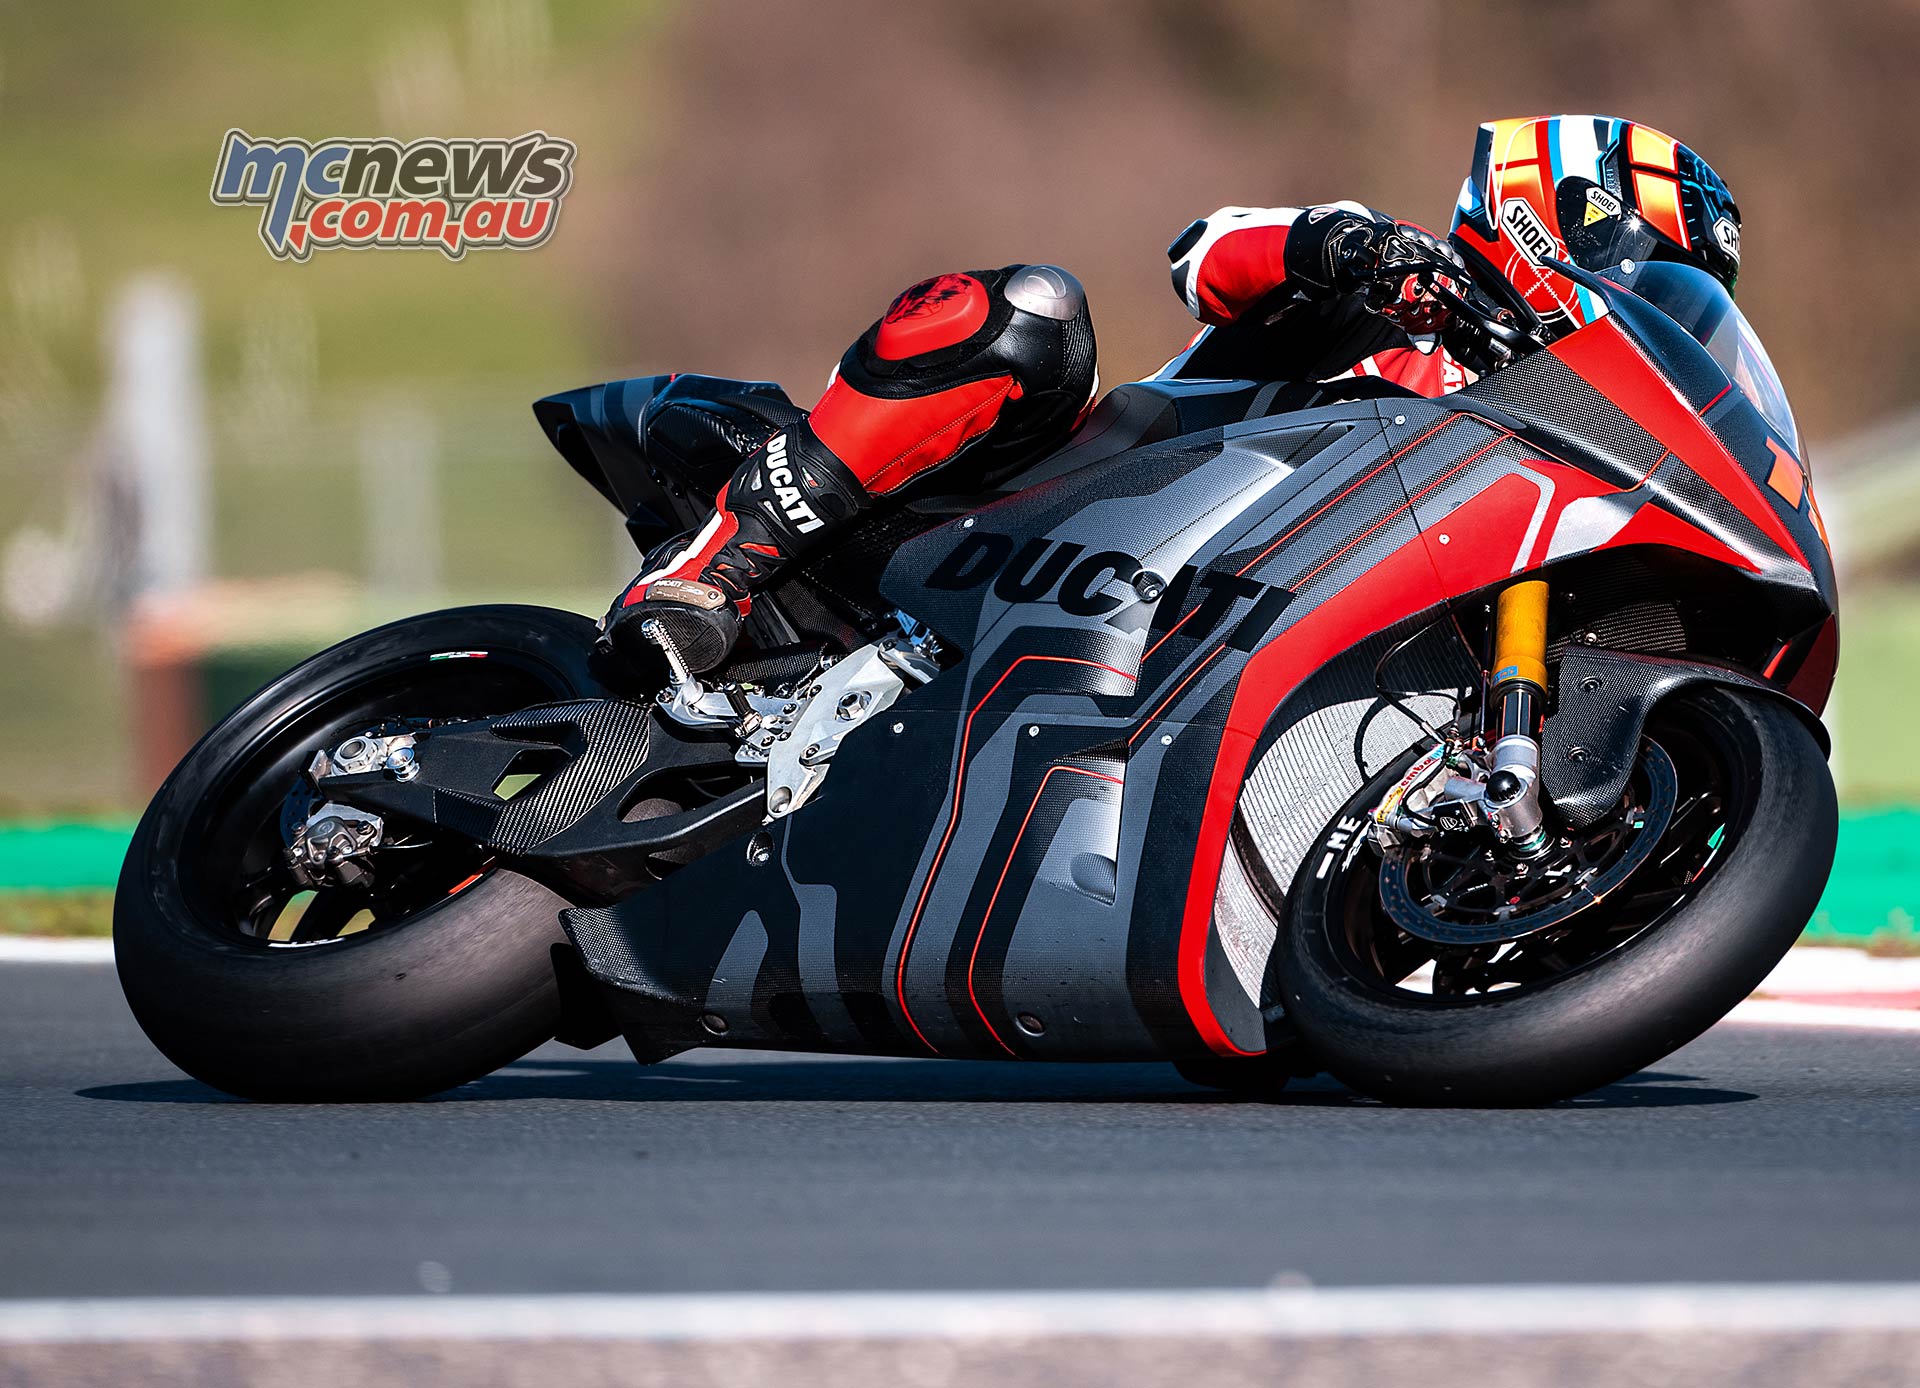 Vidéo : Première moto radiocommandé avec wheeling et drift au monde, la  Ducati V4 S - France Stunt Media